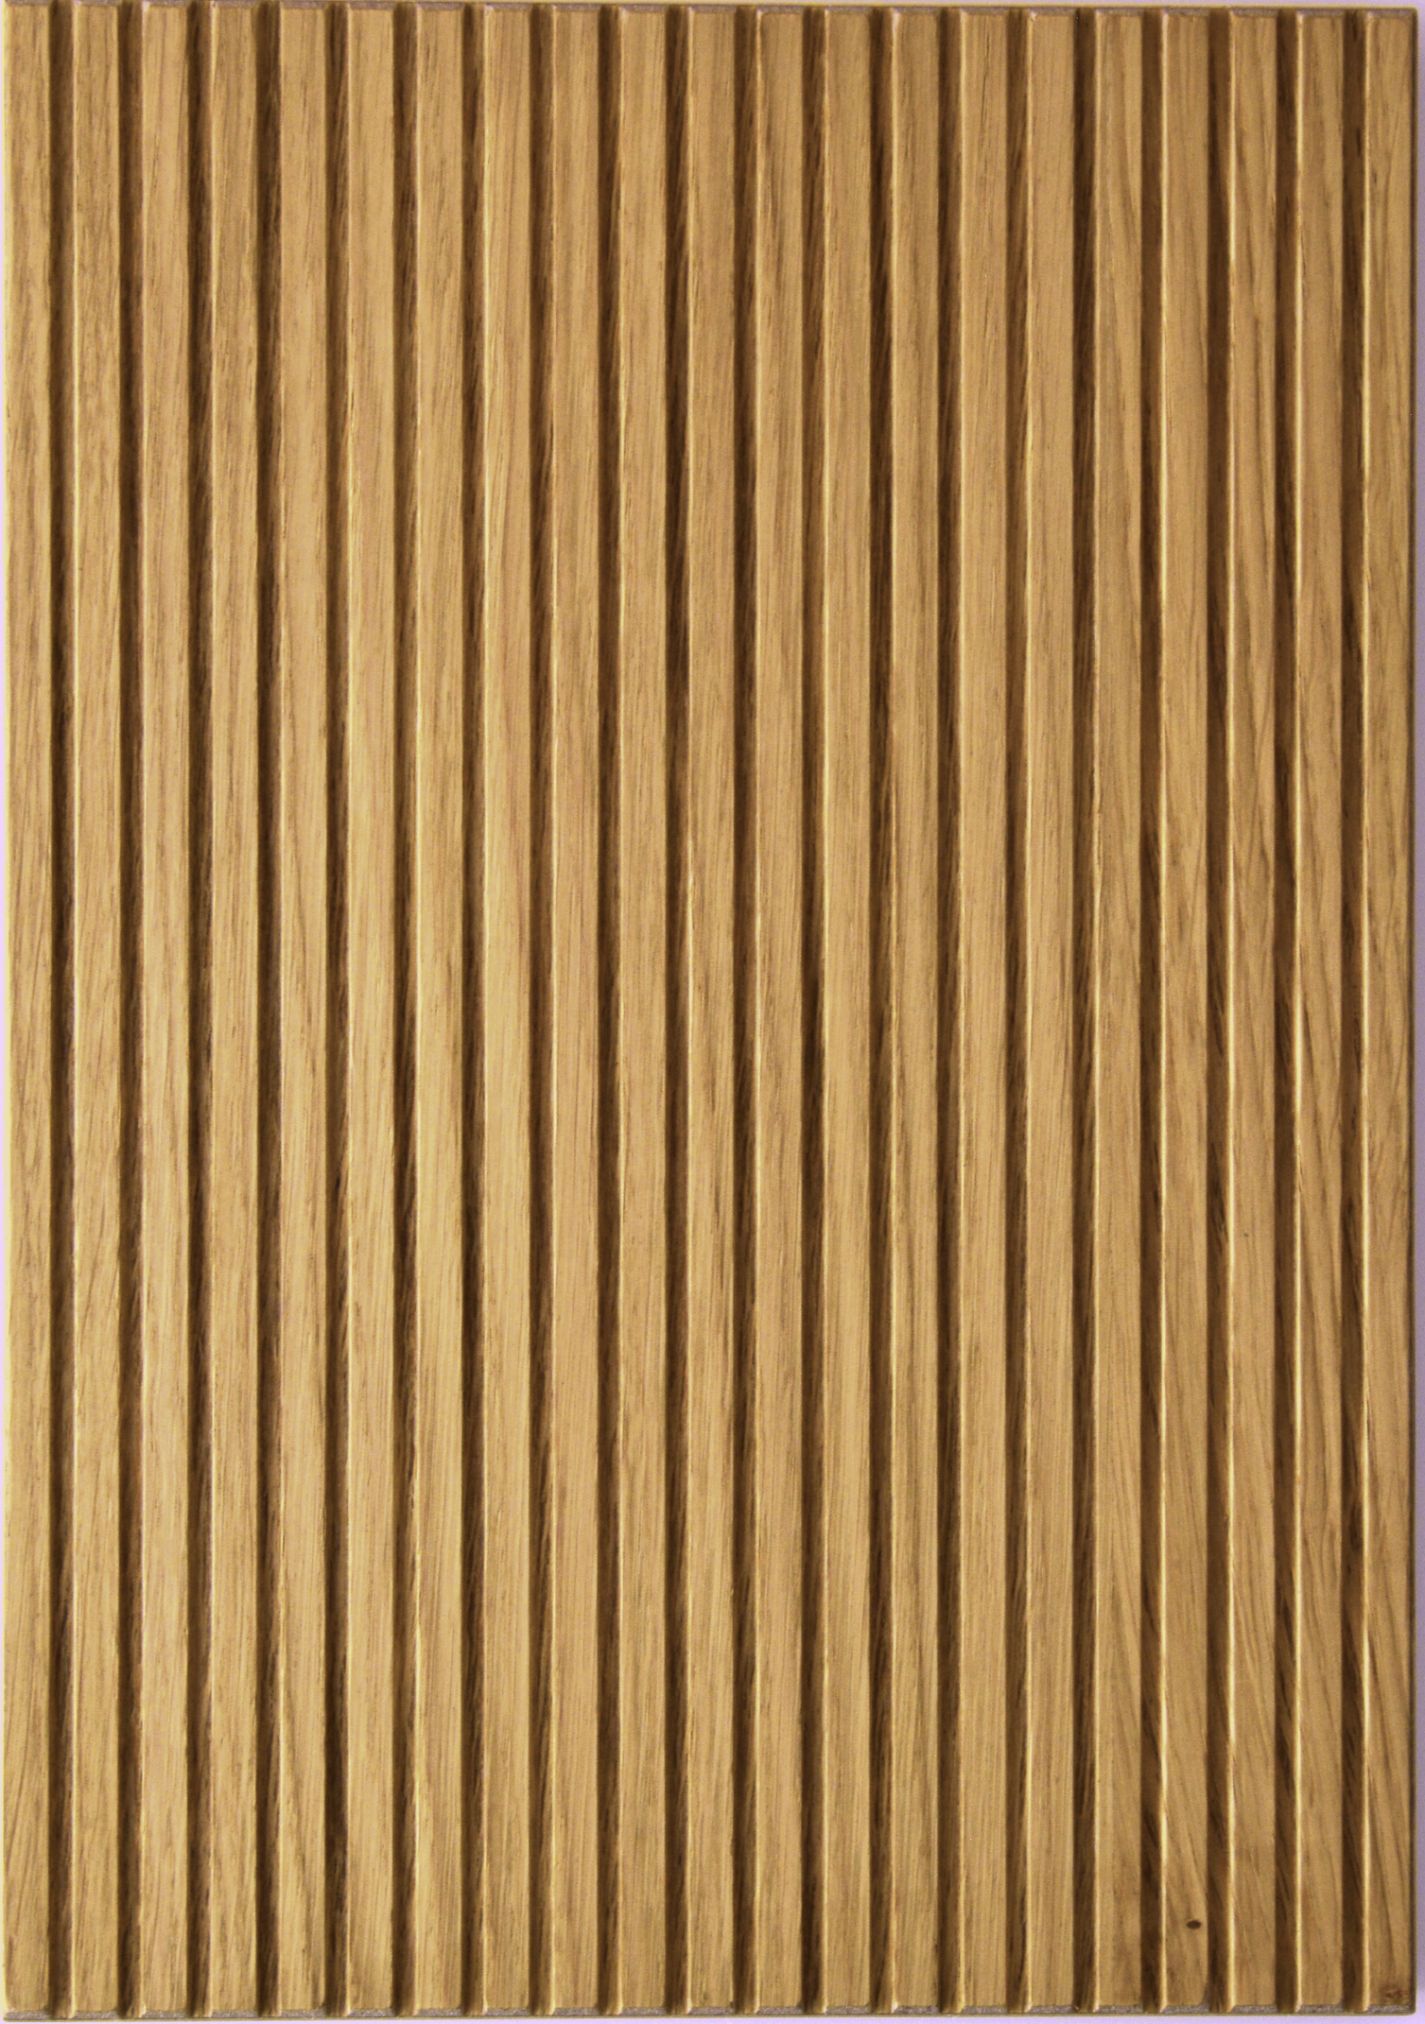 2651 - Stripes - Knob Oak - Real wood veneer